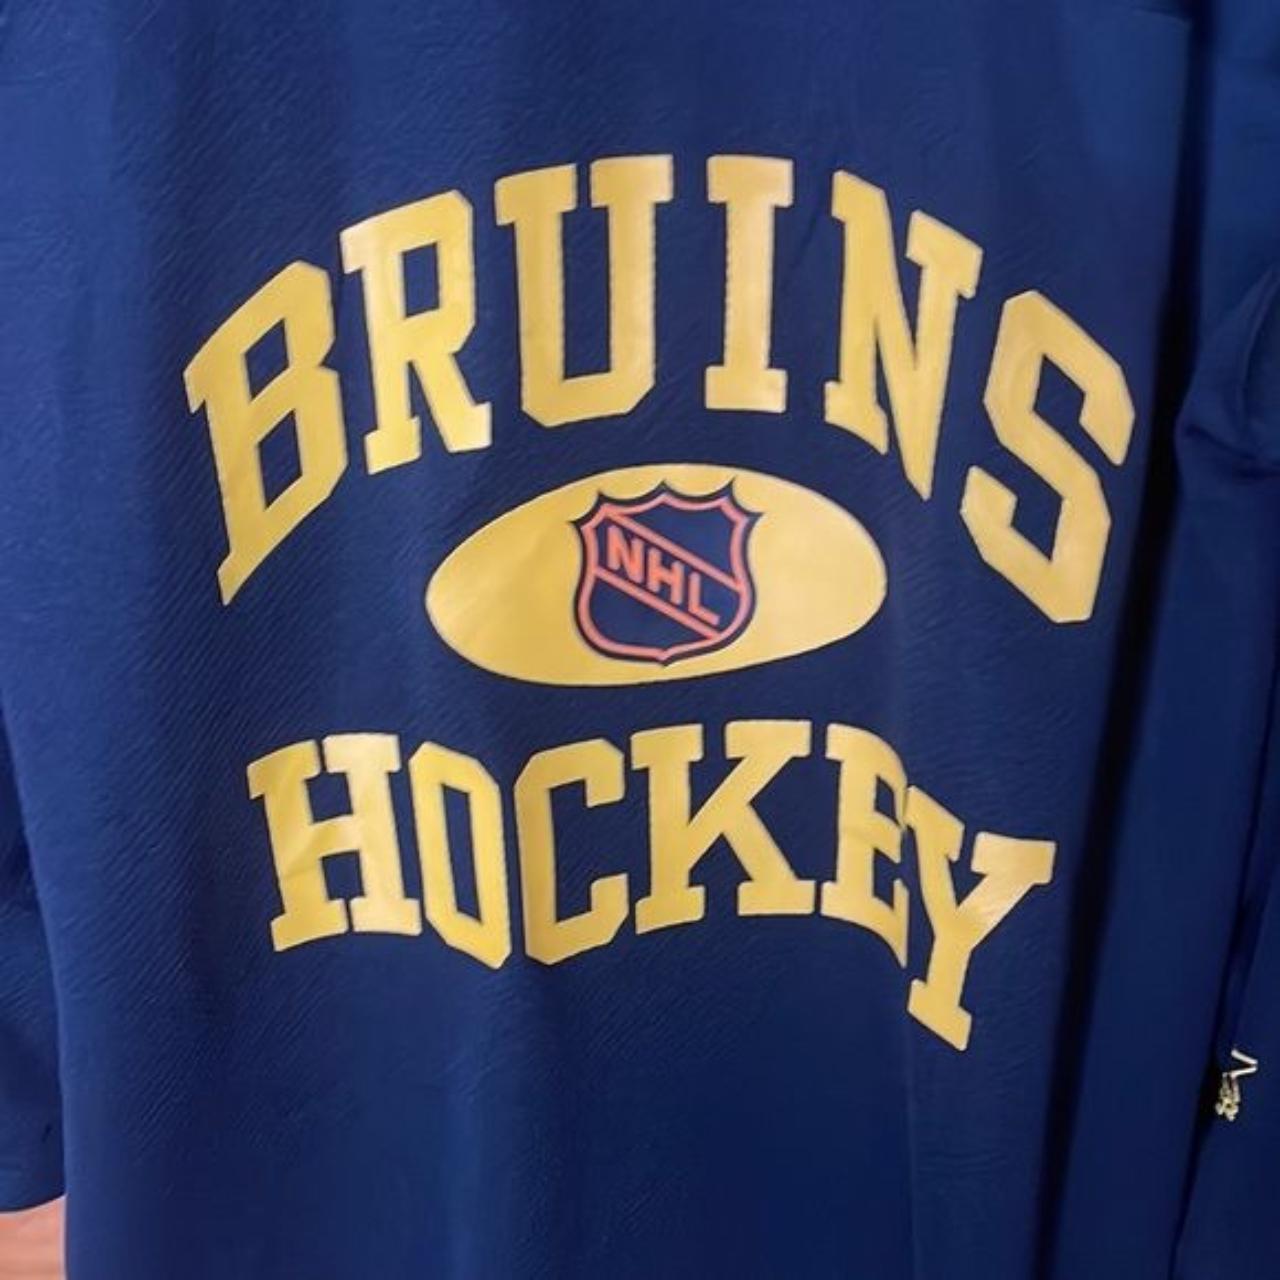 Vintage 90's Starter NHL Boston Bruins Hockey Jersey